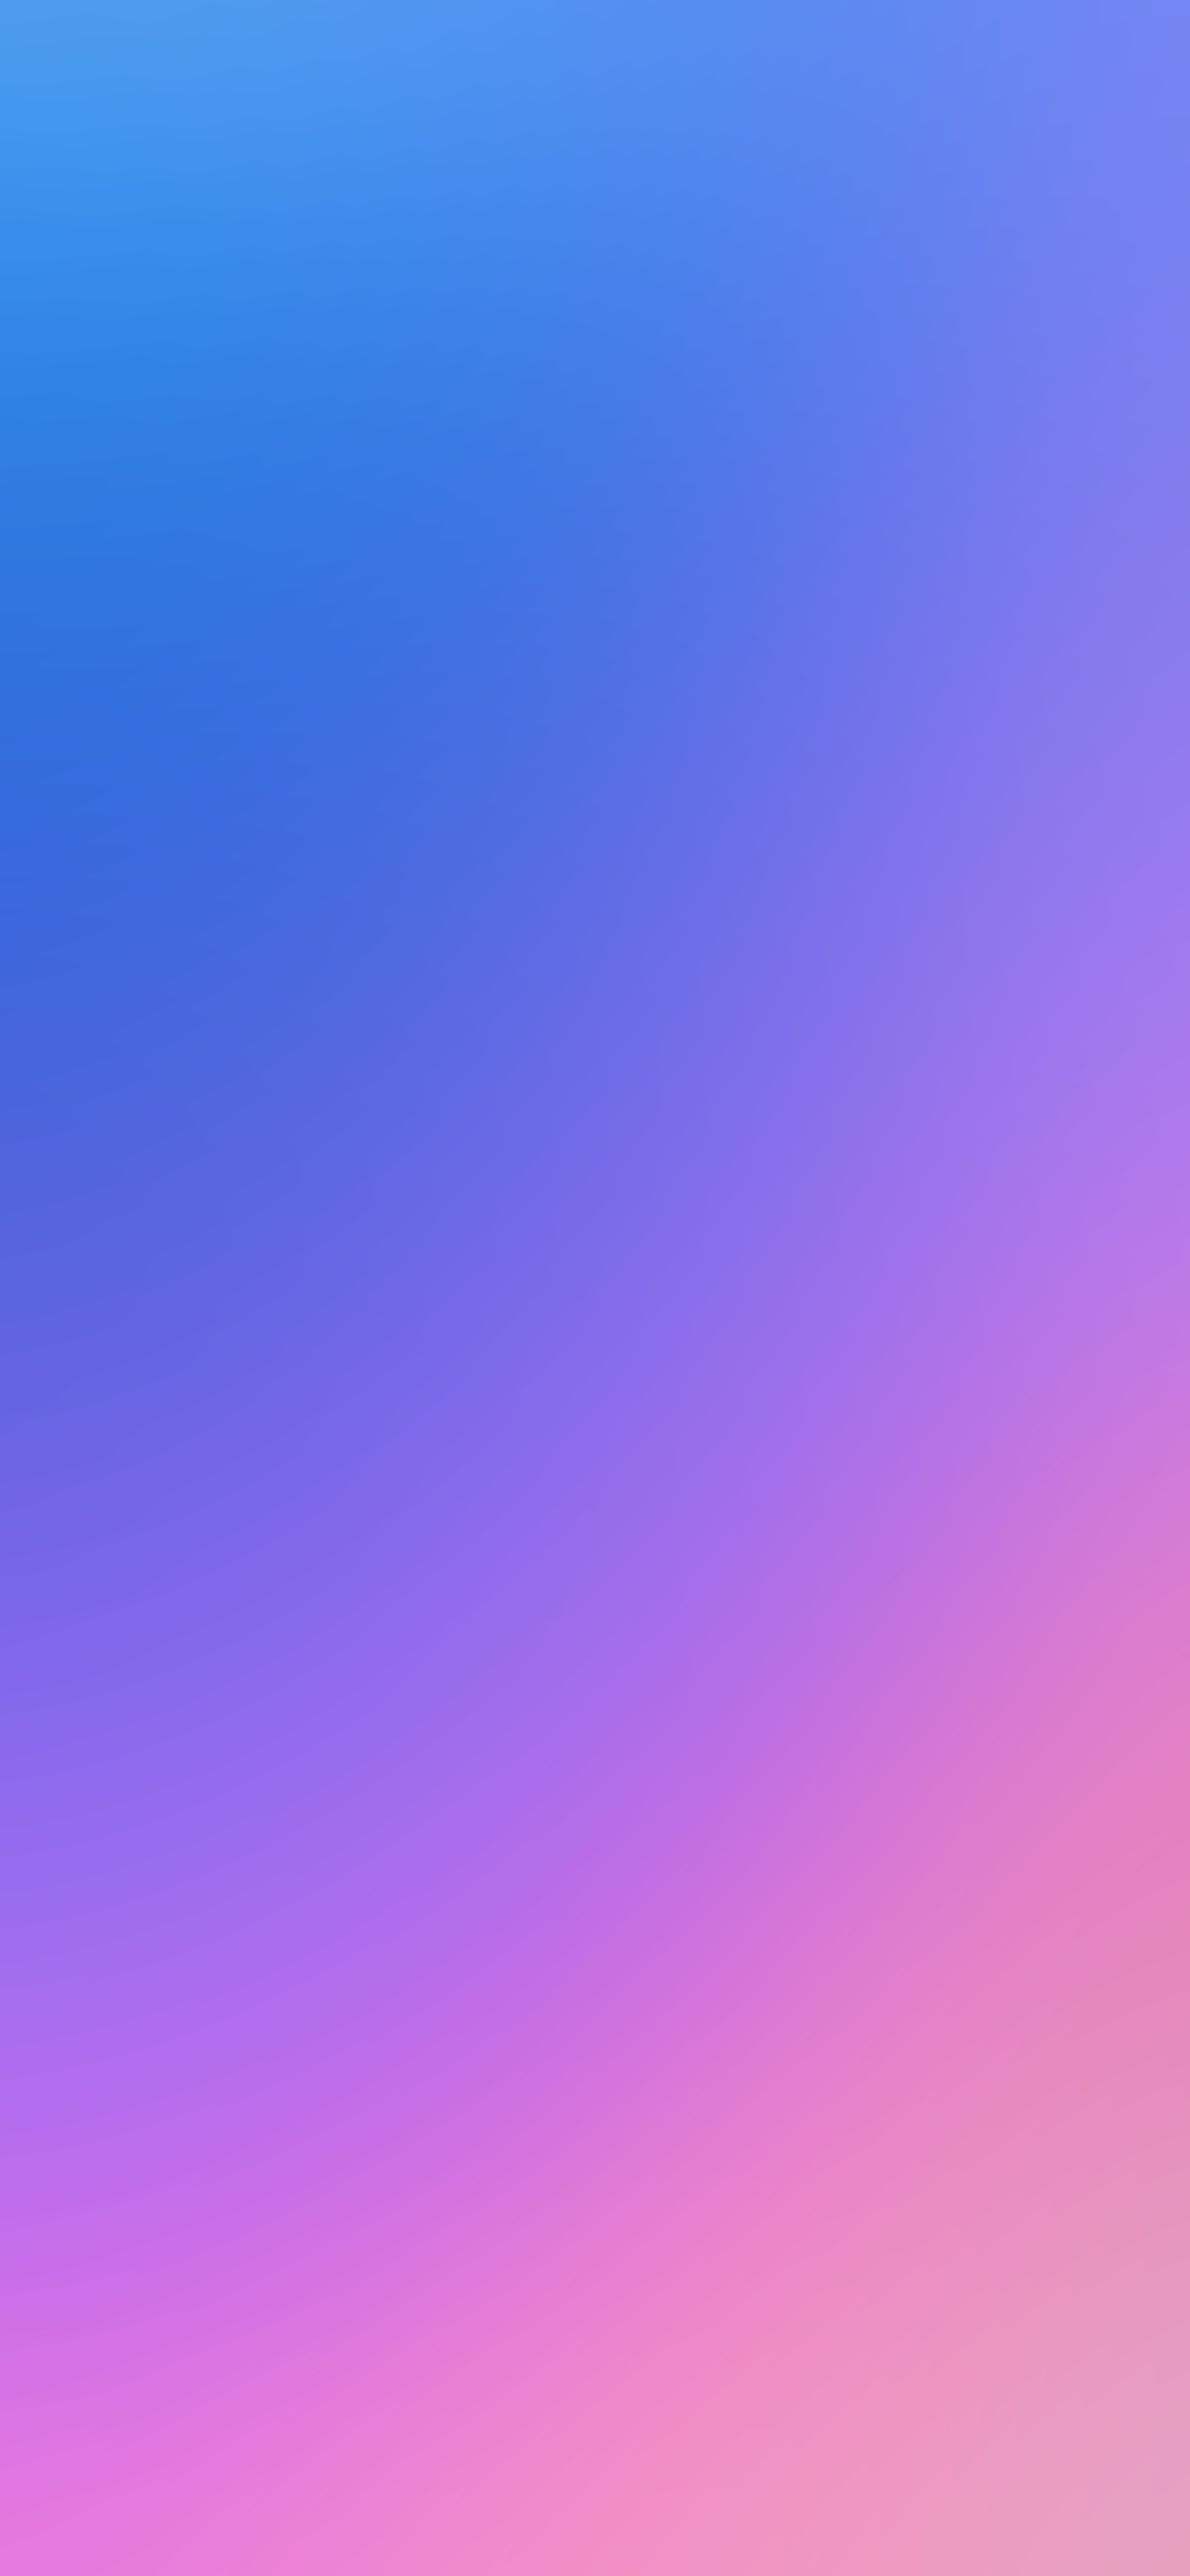 farbverlauf iphone wallpaper,himmel,blau,violett,tagsüber,lila